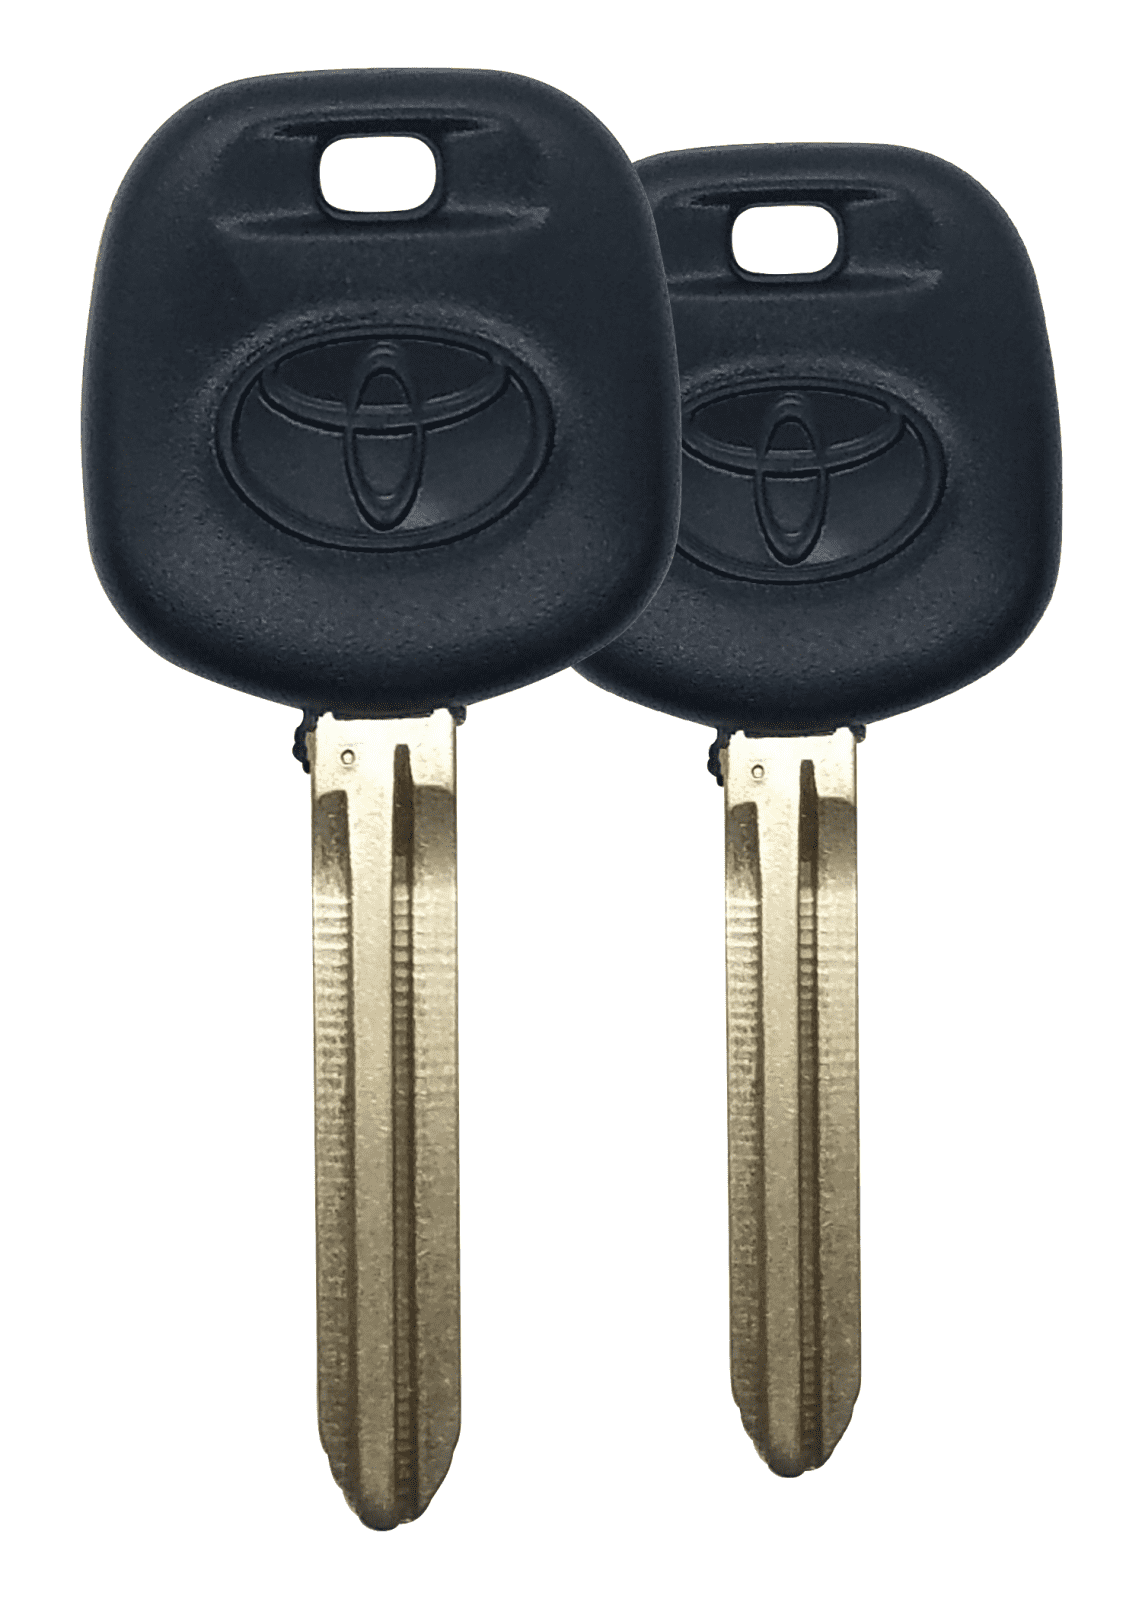 2x New Transponder Ignition Car Key for Ford Lincoln Mercury Mazda 40 Bit Chip